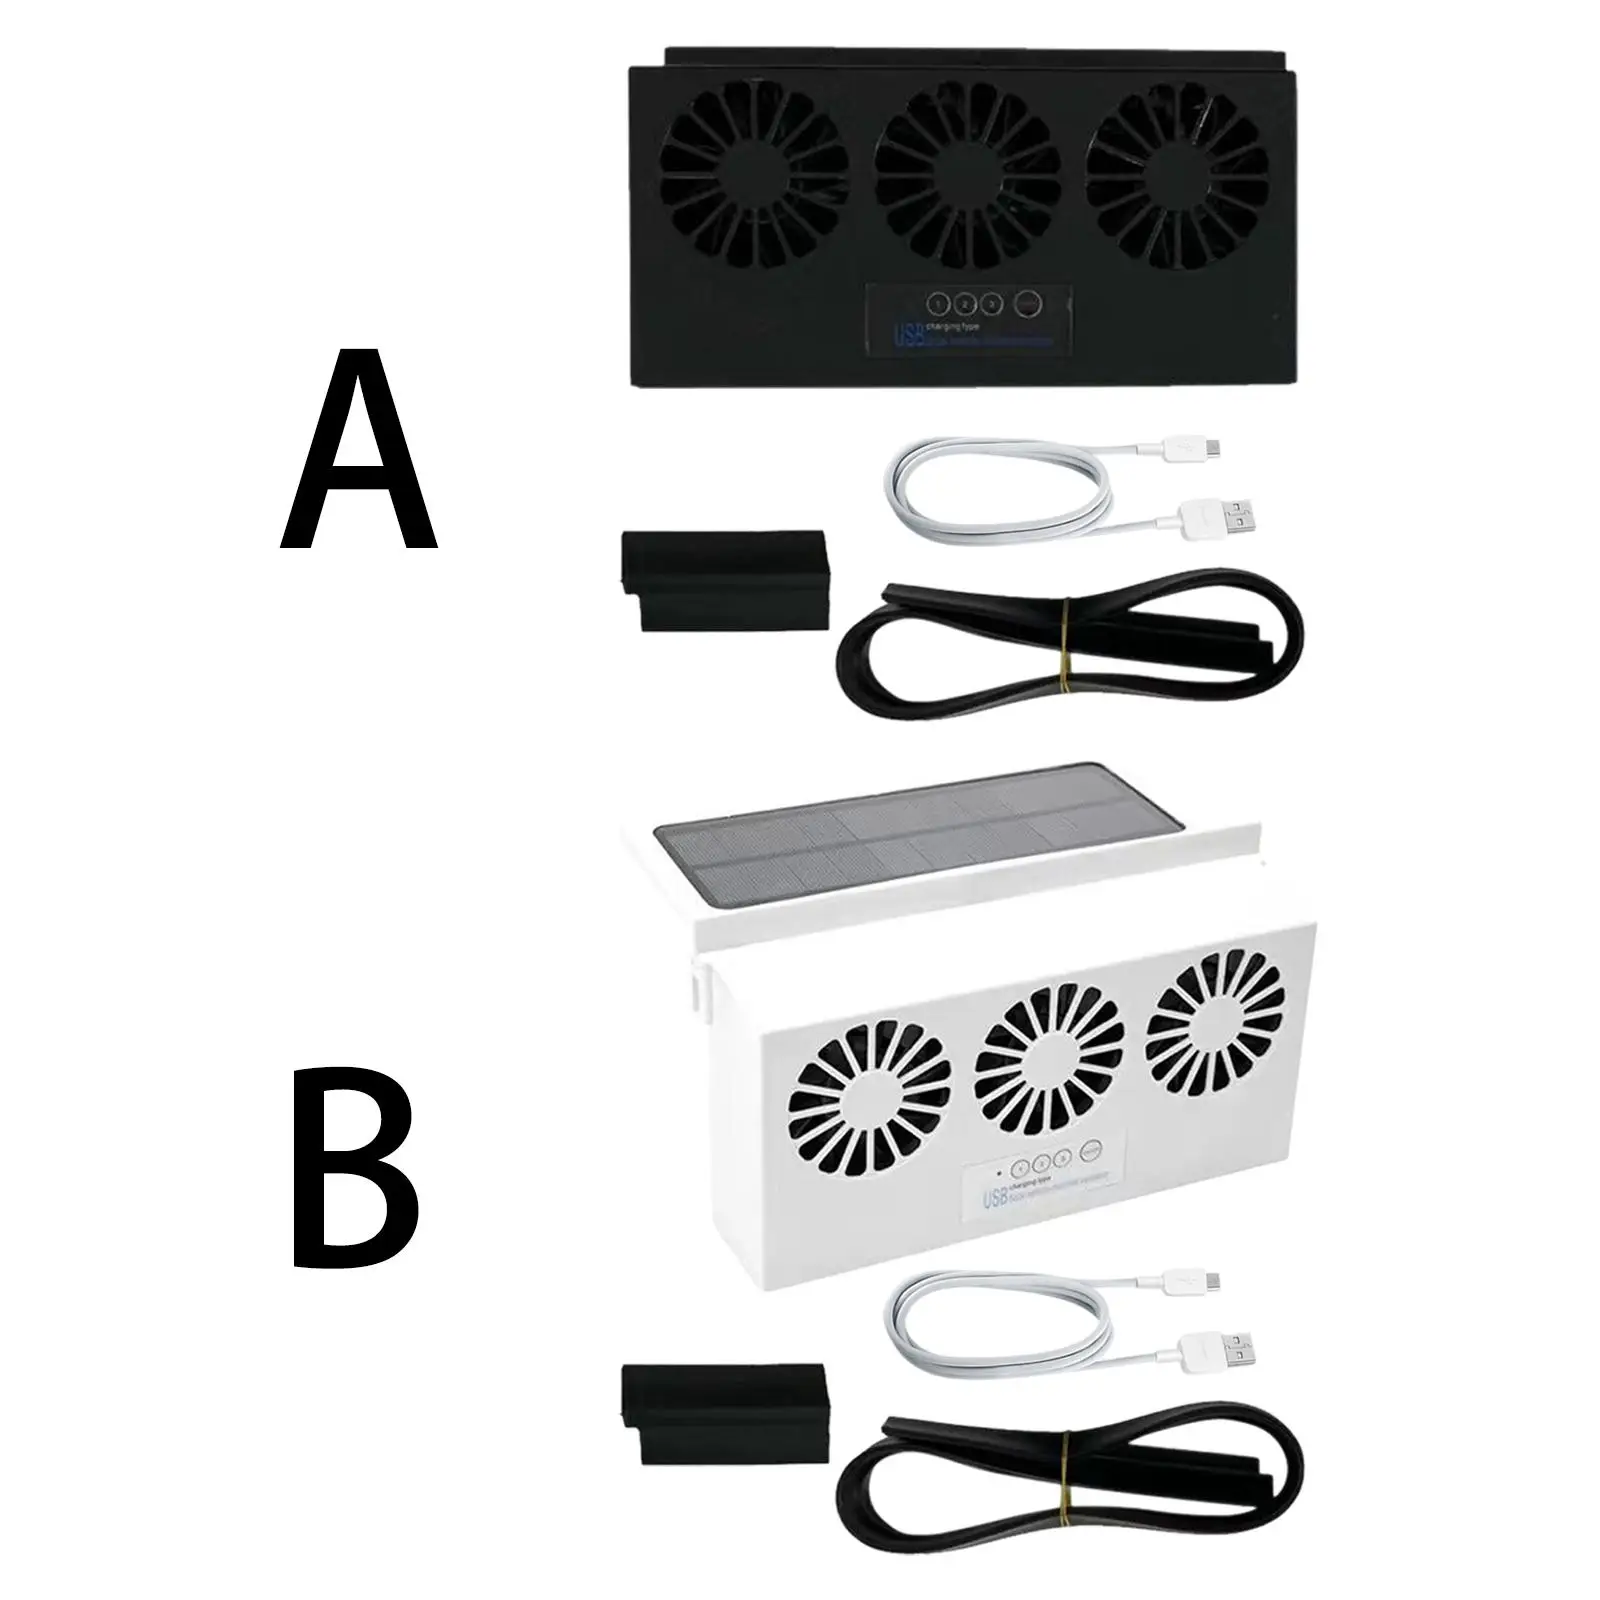 Car Ventilator Exhaust Fan Portable USB Charging Safe for Vehicle